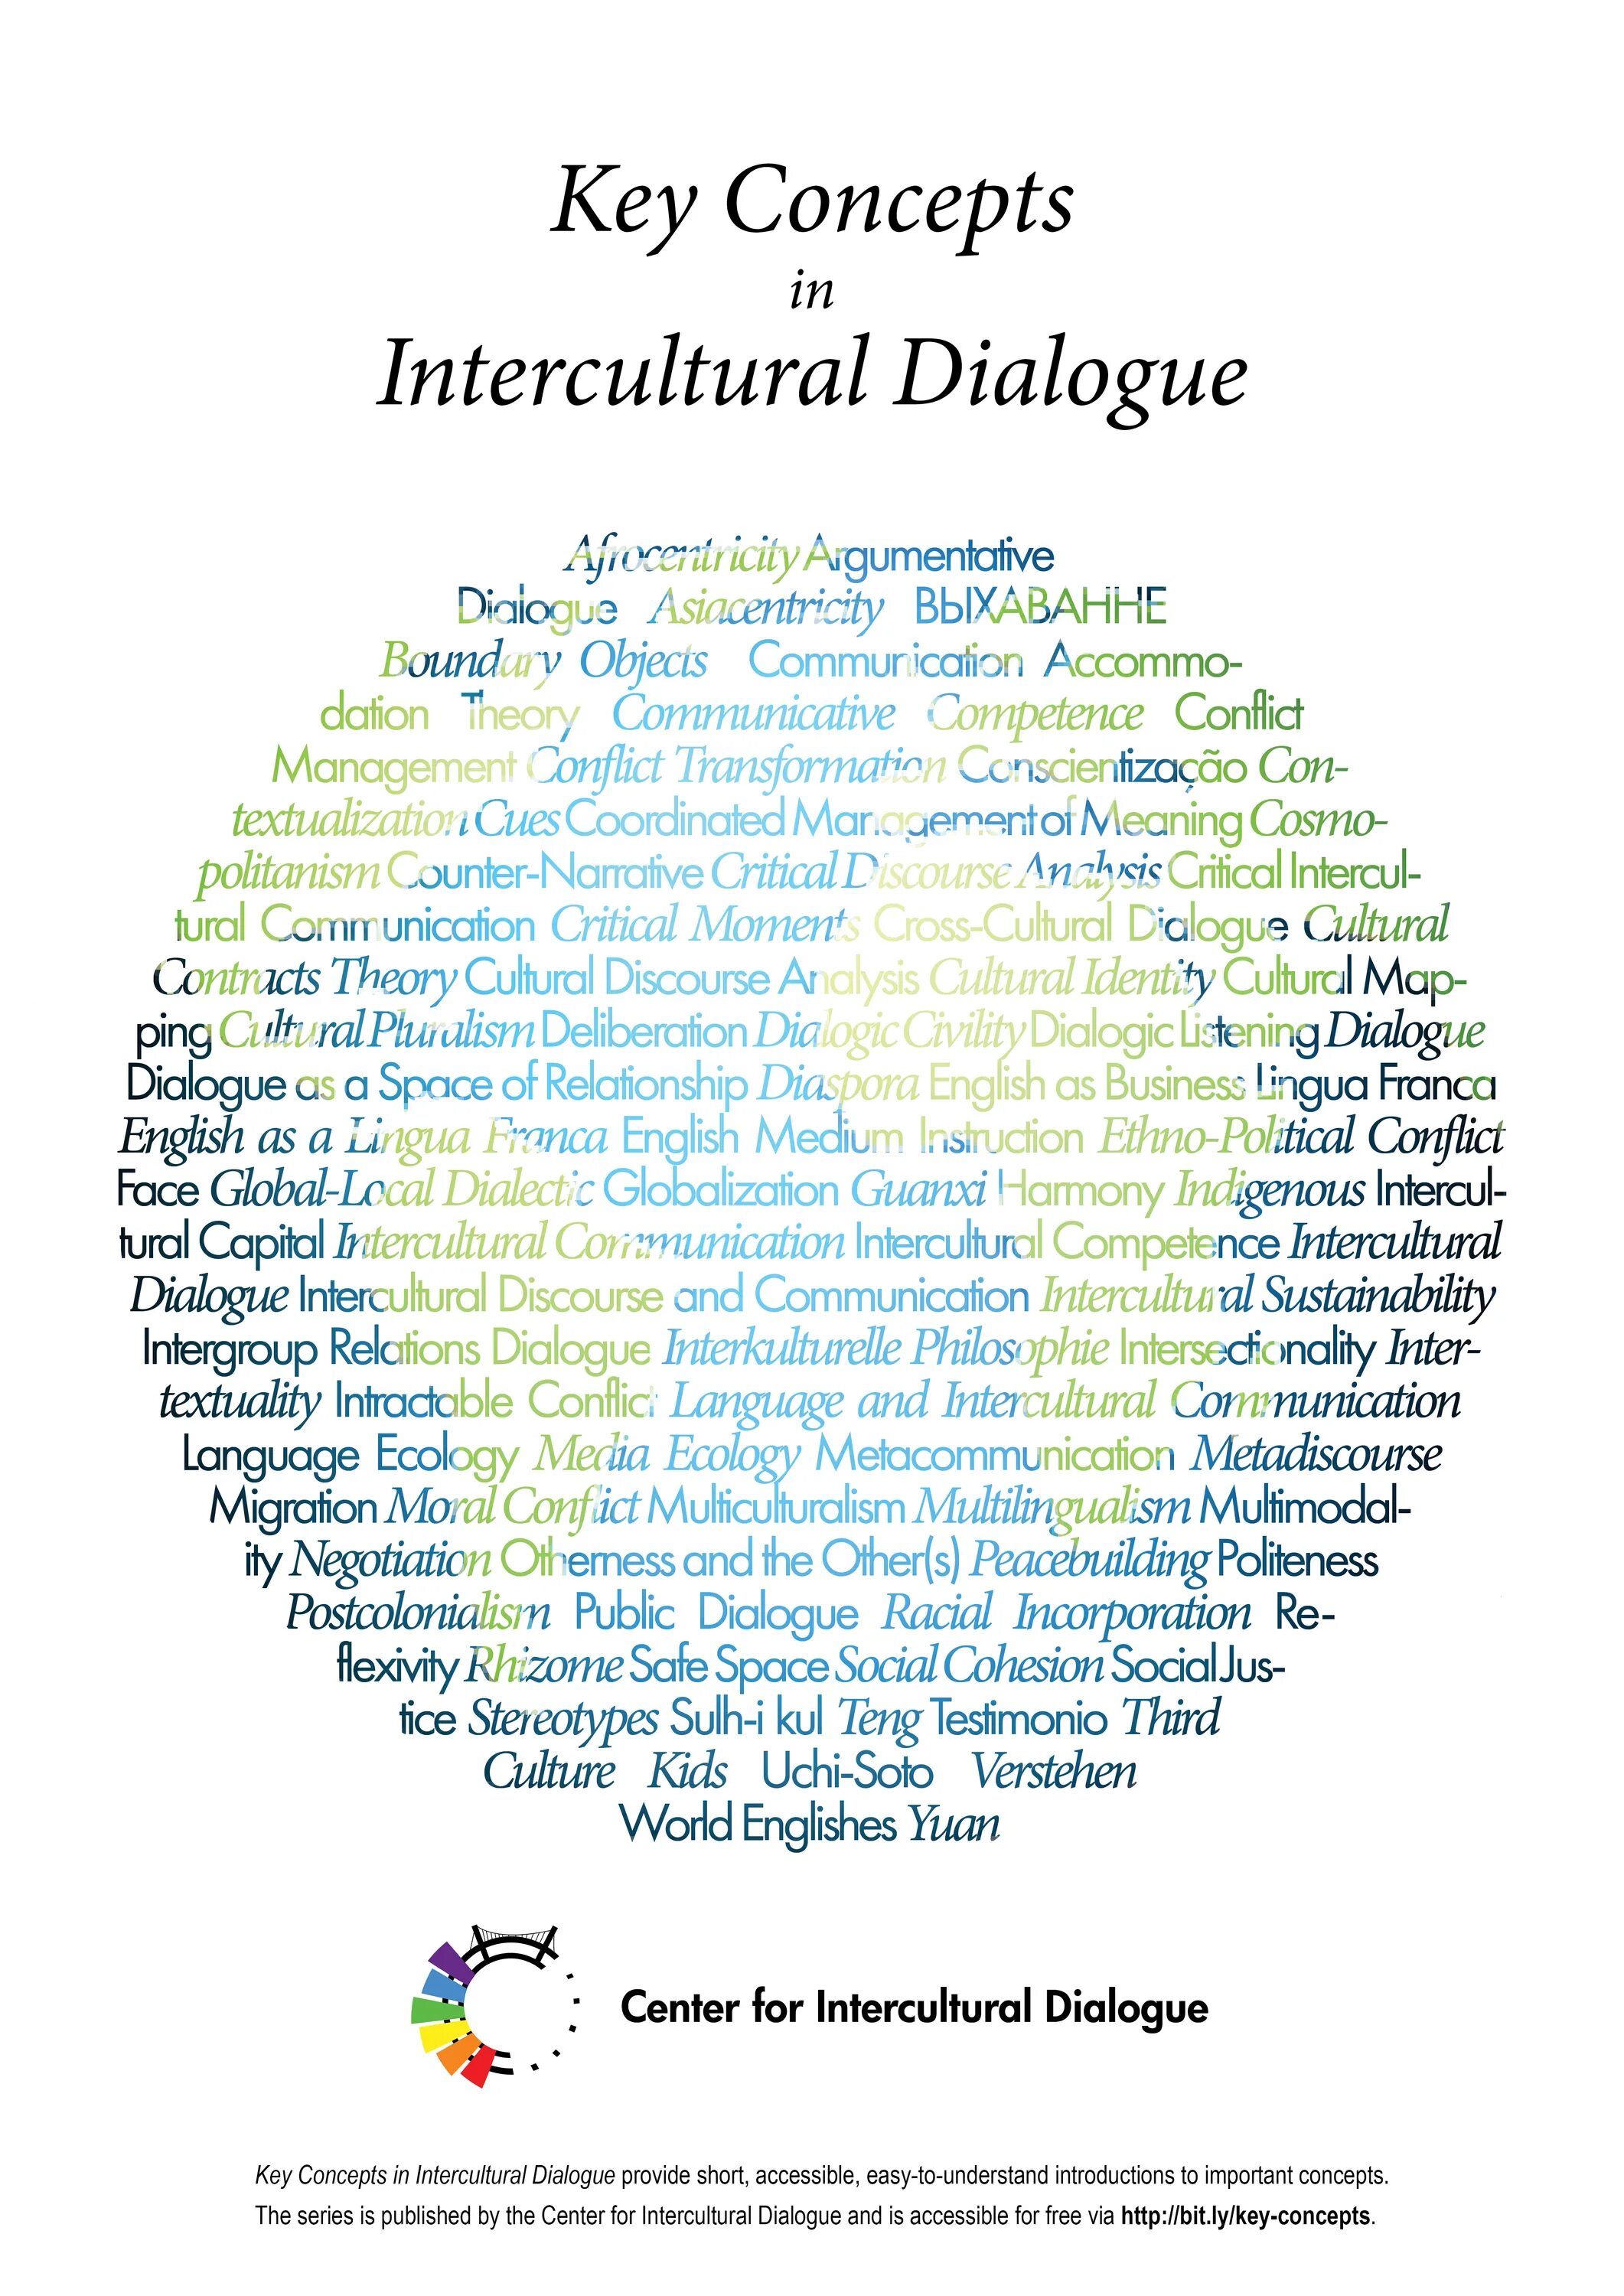 Dialogue key. Key Concepts in Intercultural Dialogue. Intercultural Dialogue. “Identity” Intercultural communication. Key Concepts.